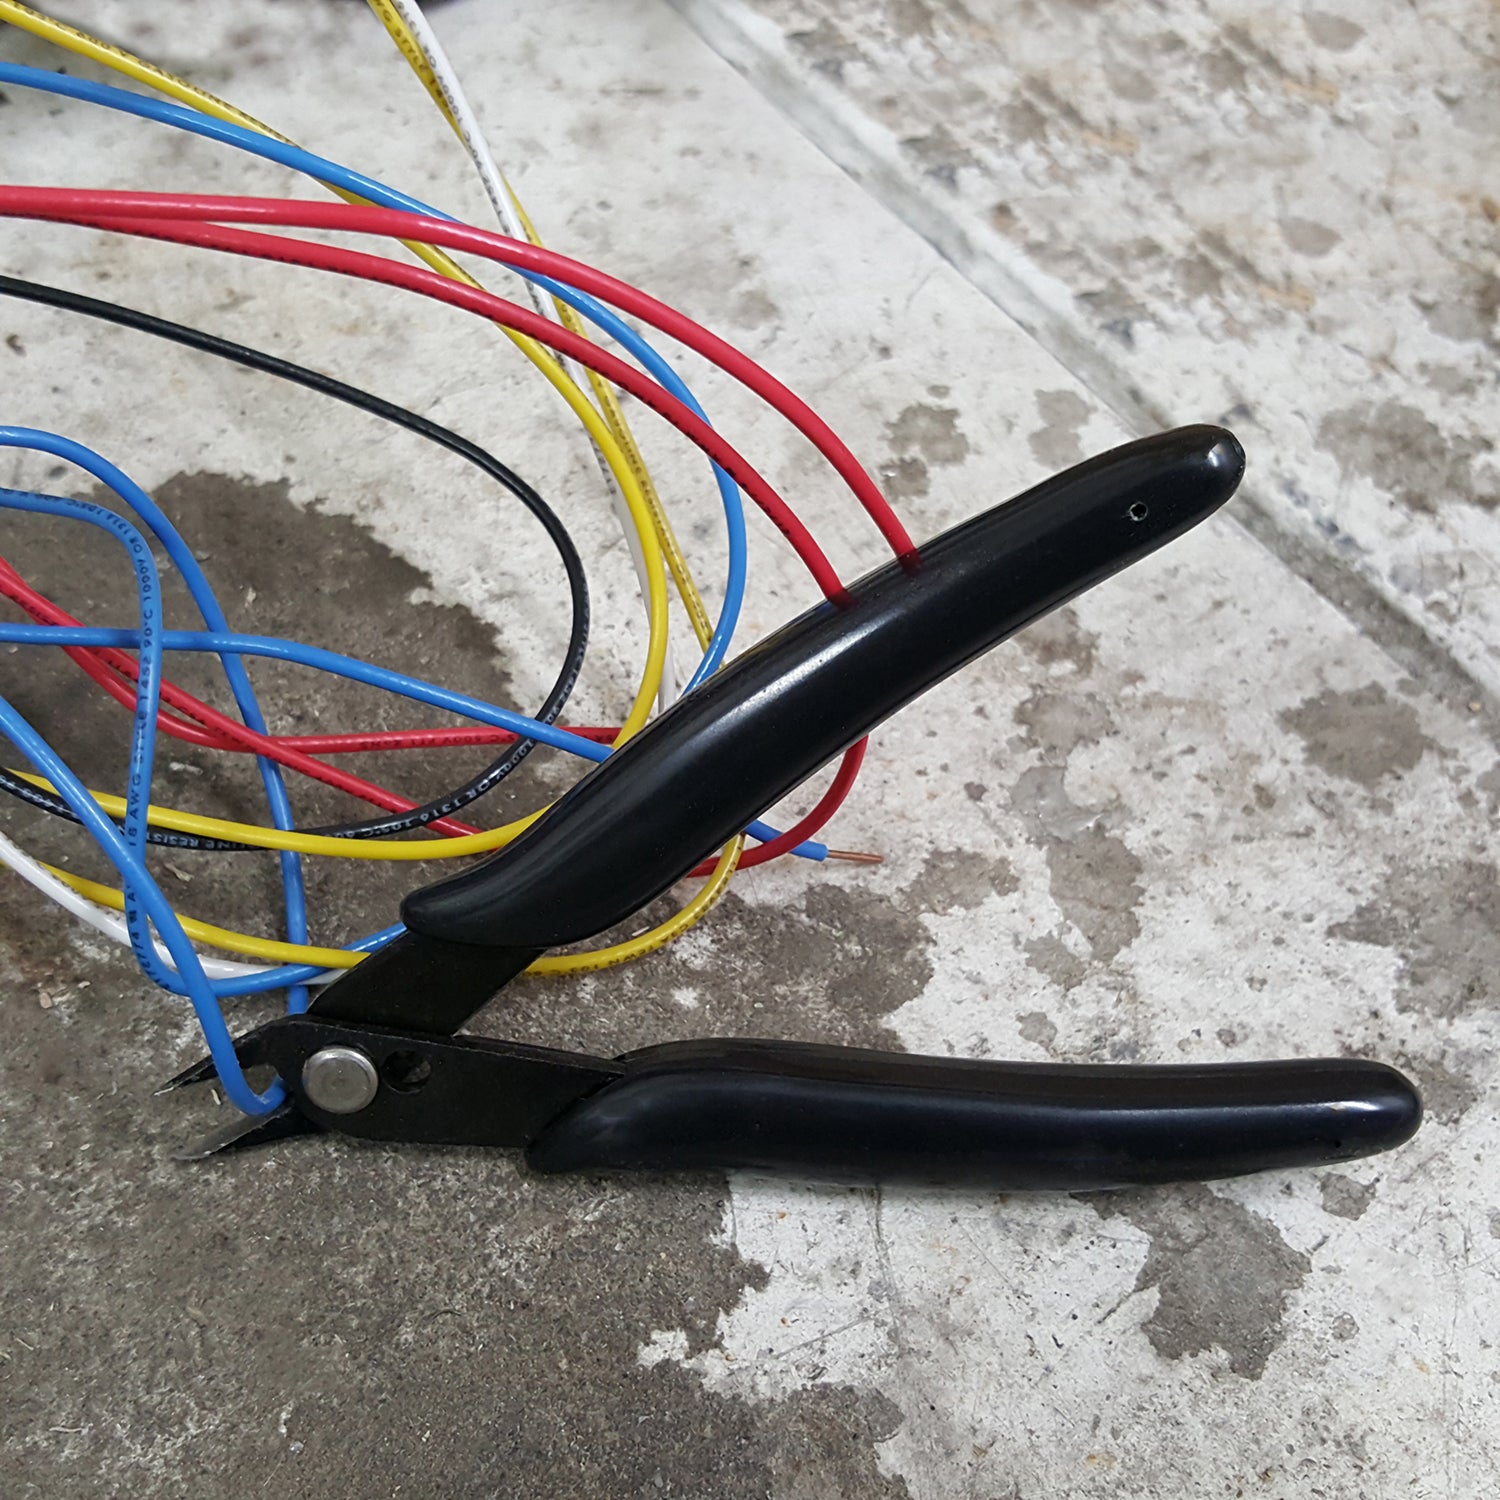 Wire Flush Cutter Tool - 18 Gauge Electrical Nippers Micro Cutter, 2pk